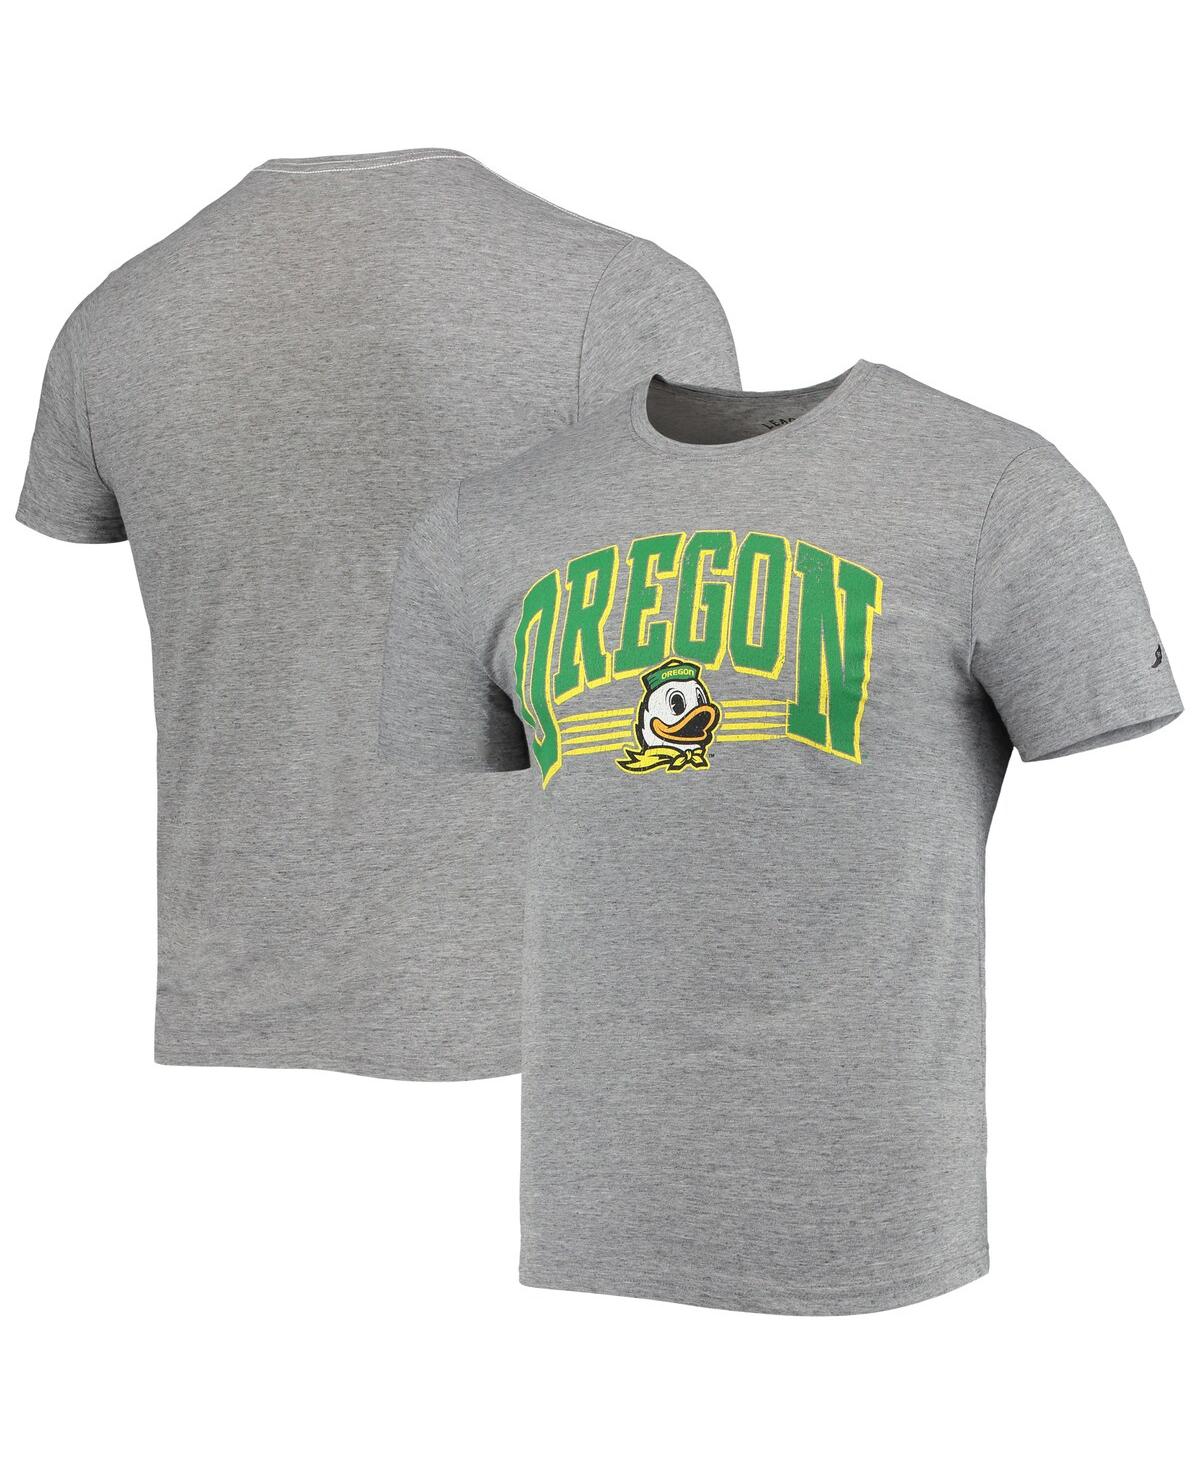 League Collegiate Wear Men's  Heathered Gray Oregon Ducks Upperclassman Jersey T-shirt